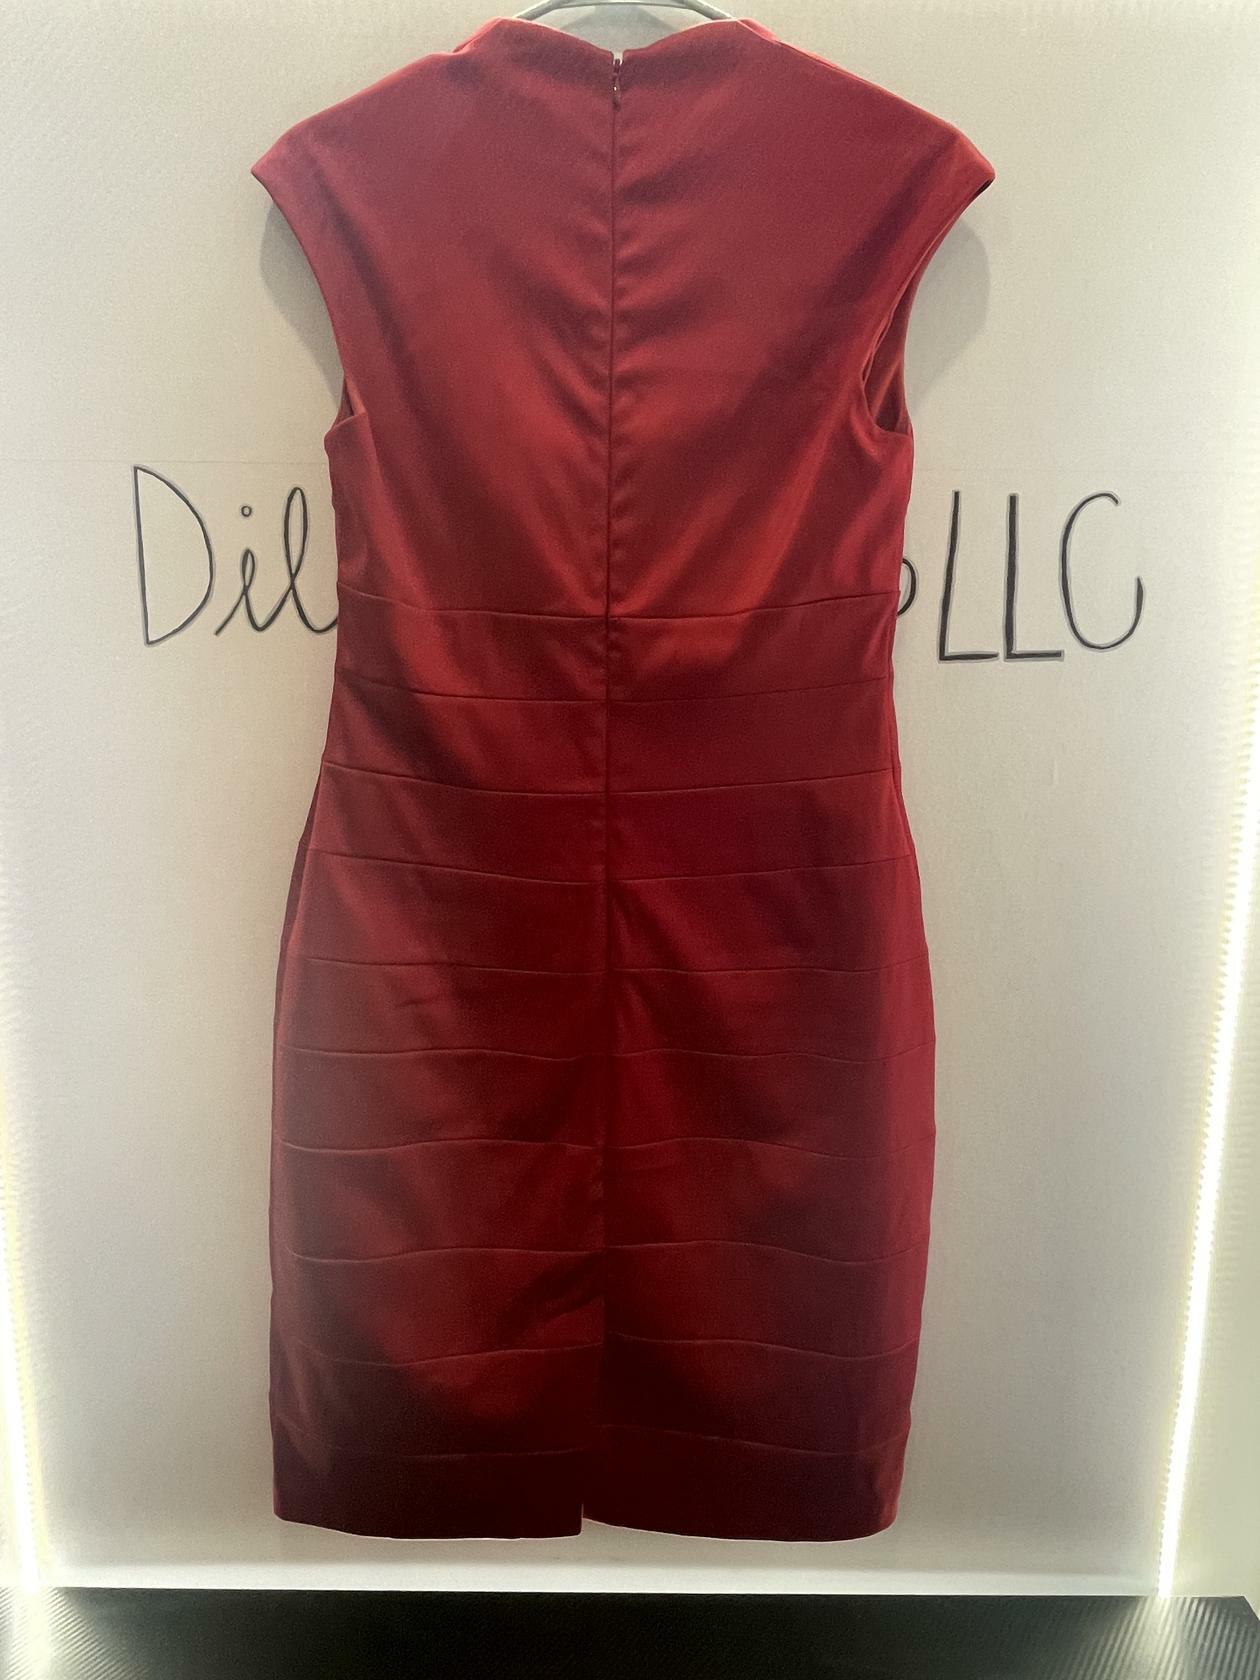 Melrose Dress Womens sz 10 Red Cap Sleeve Satin Sheath Knee Length Cocktail Chic - Very Good